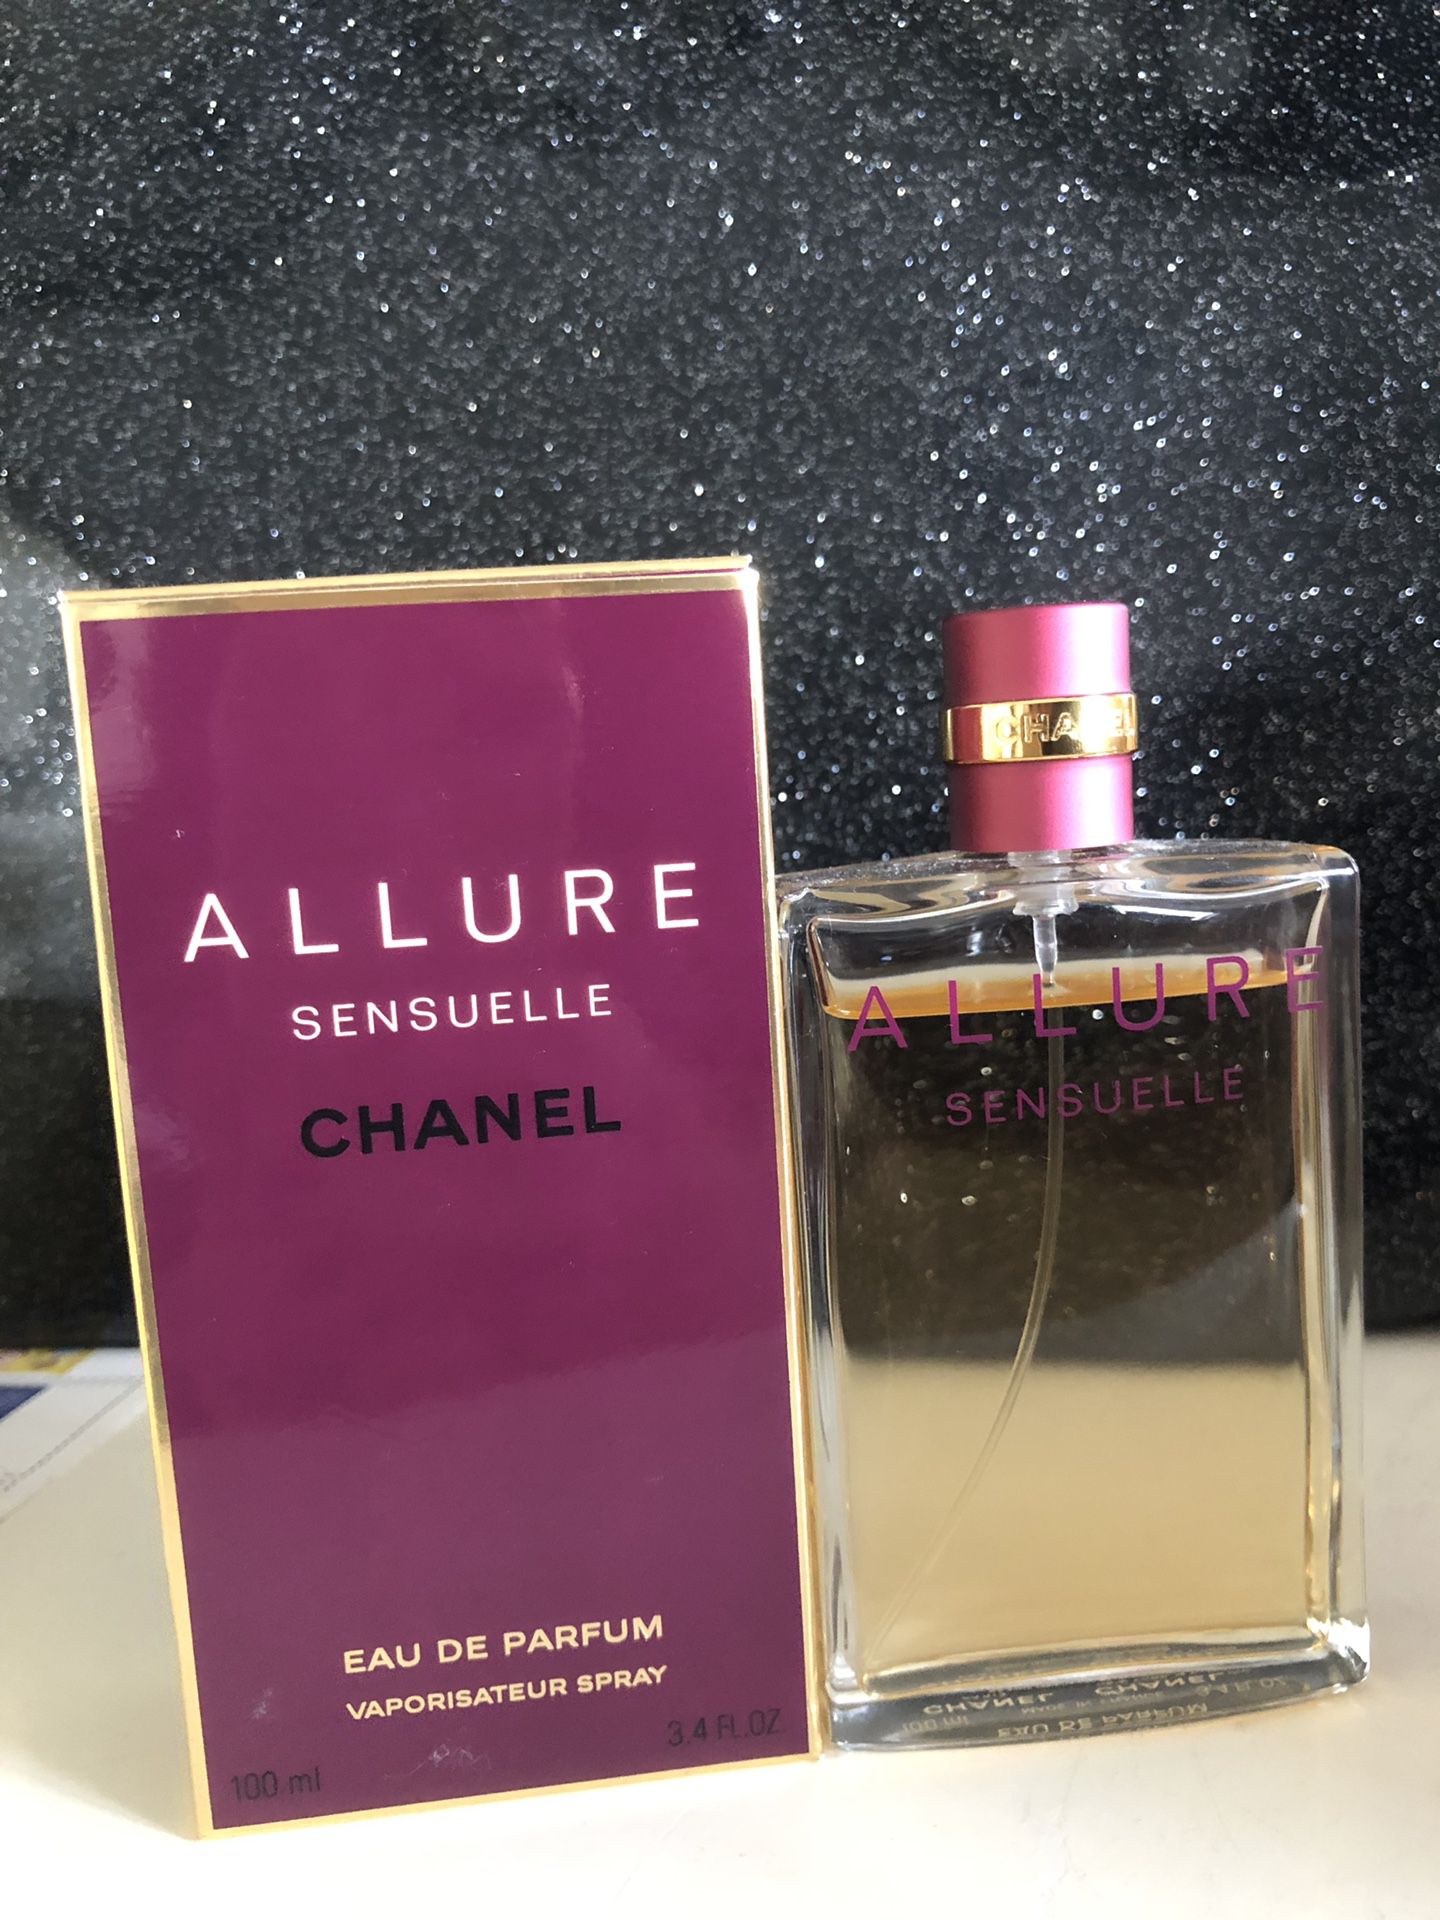 Chanel Allure Sensuelle for Sale in FL, US - OfferUp